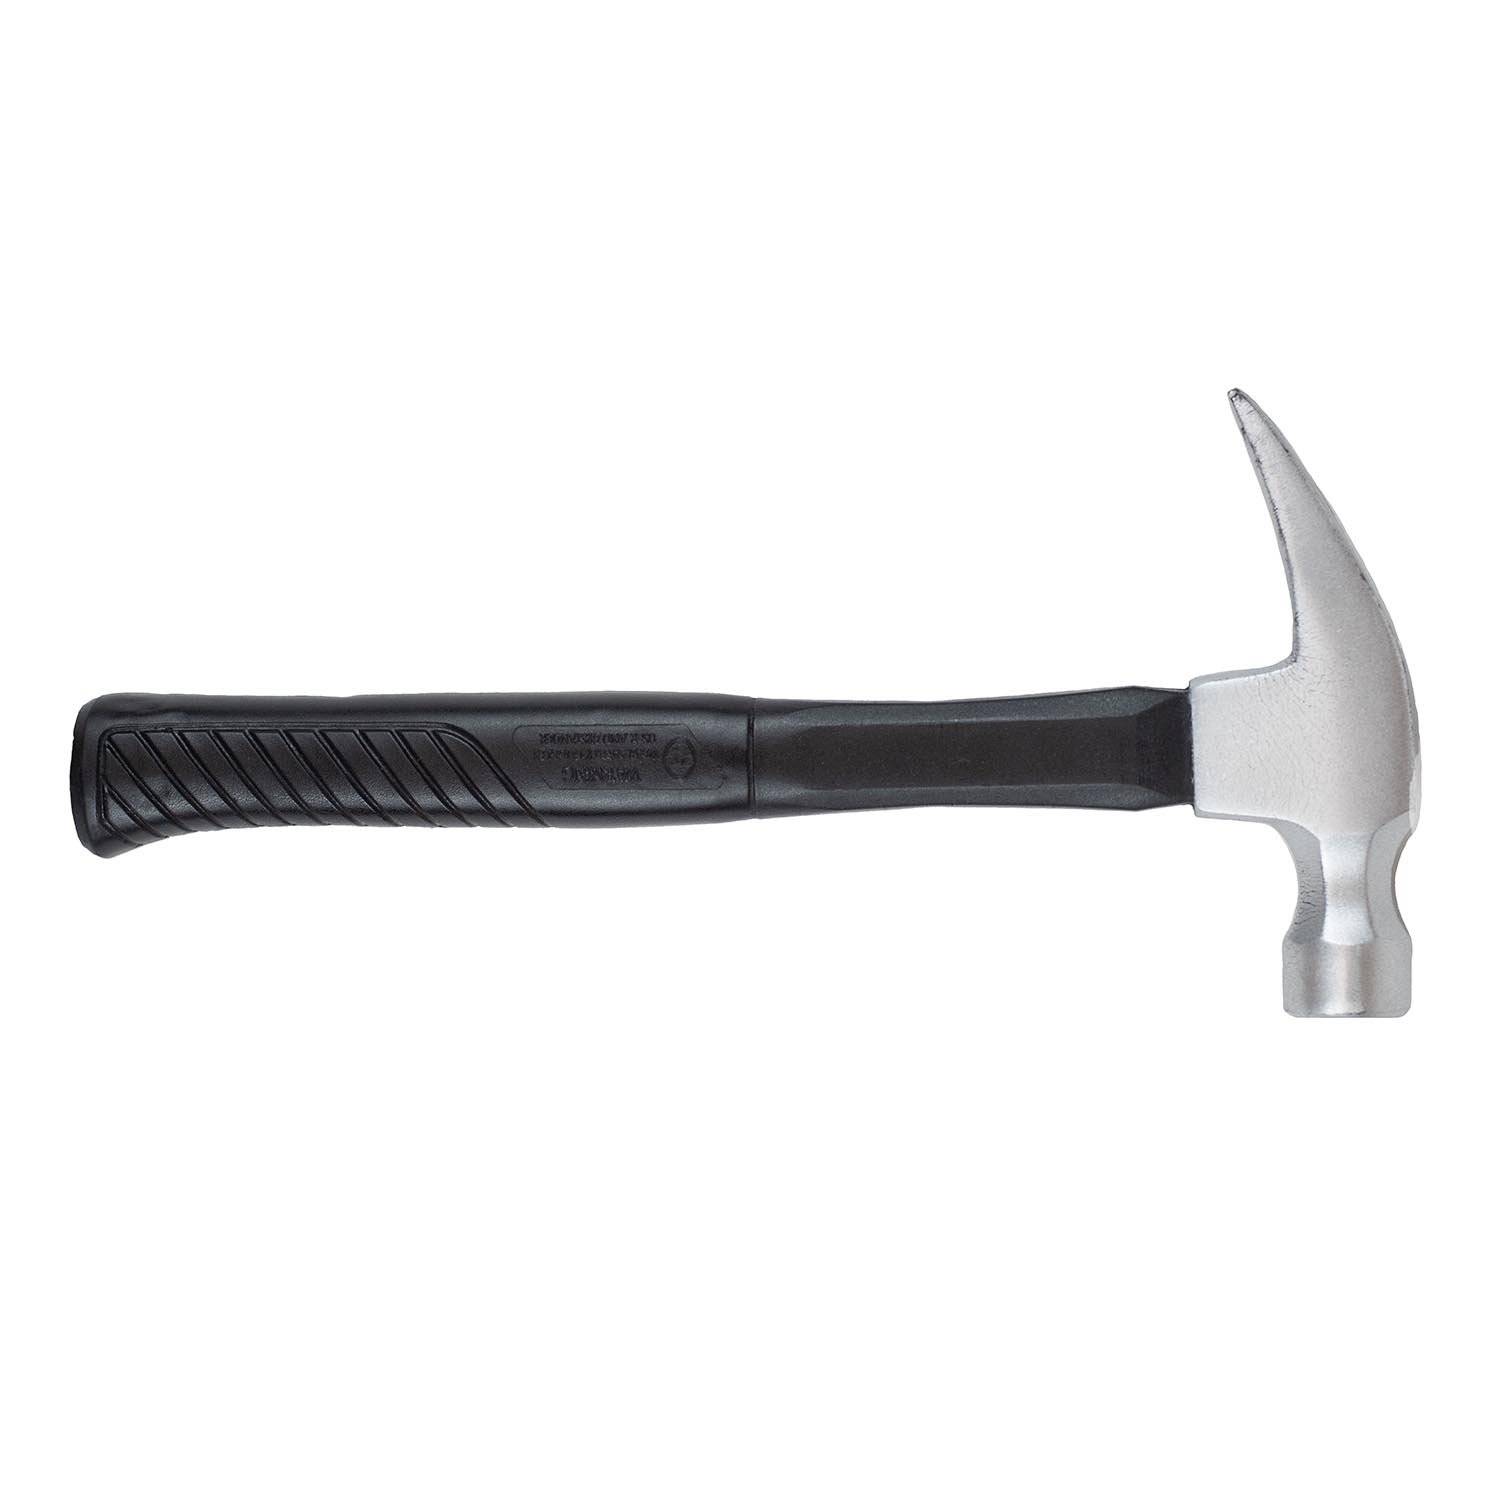 Bueguns Rubber Training Claw Hammer